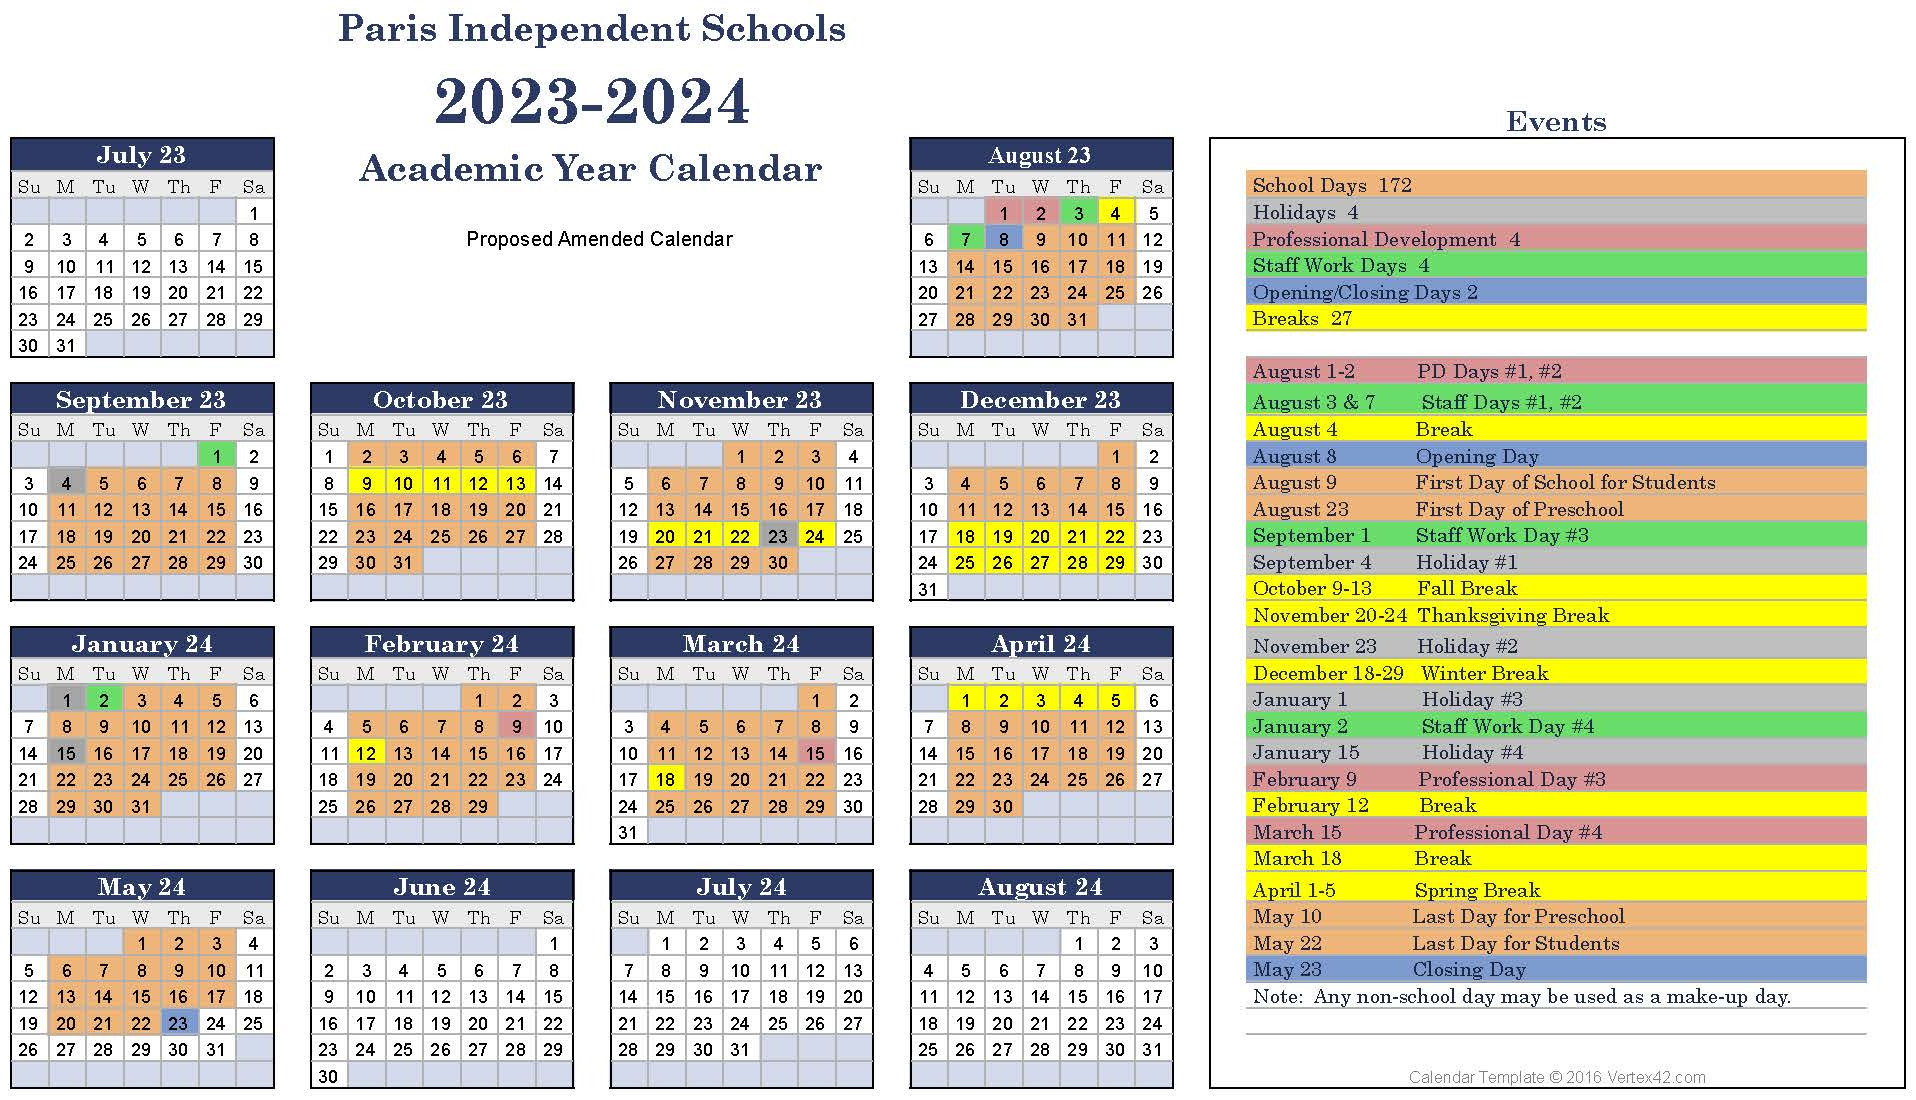 2023-24 School Calendar